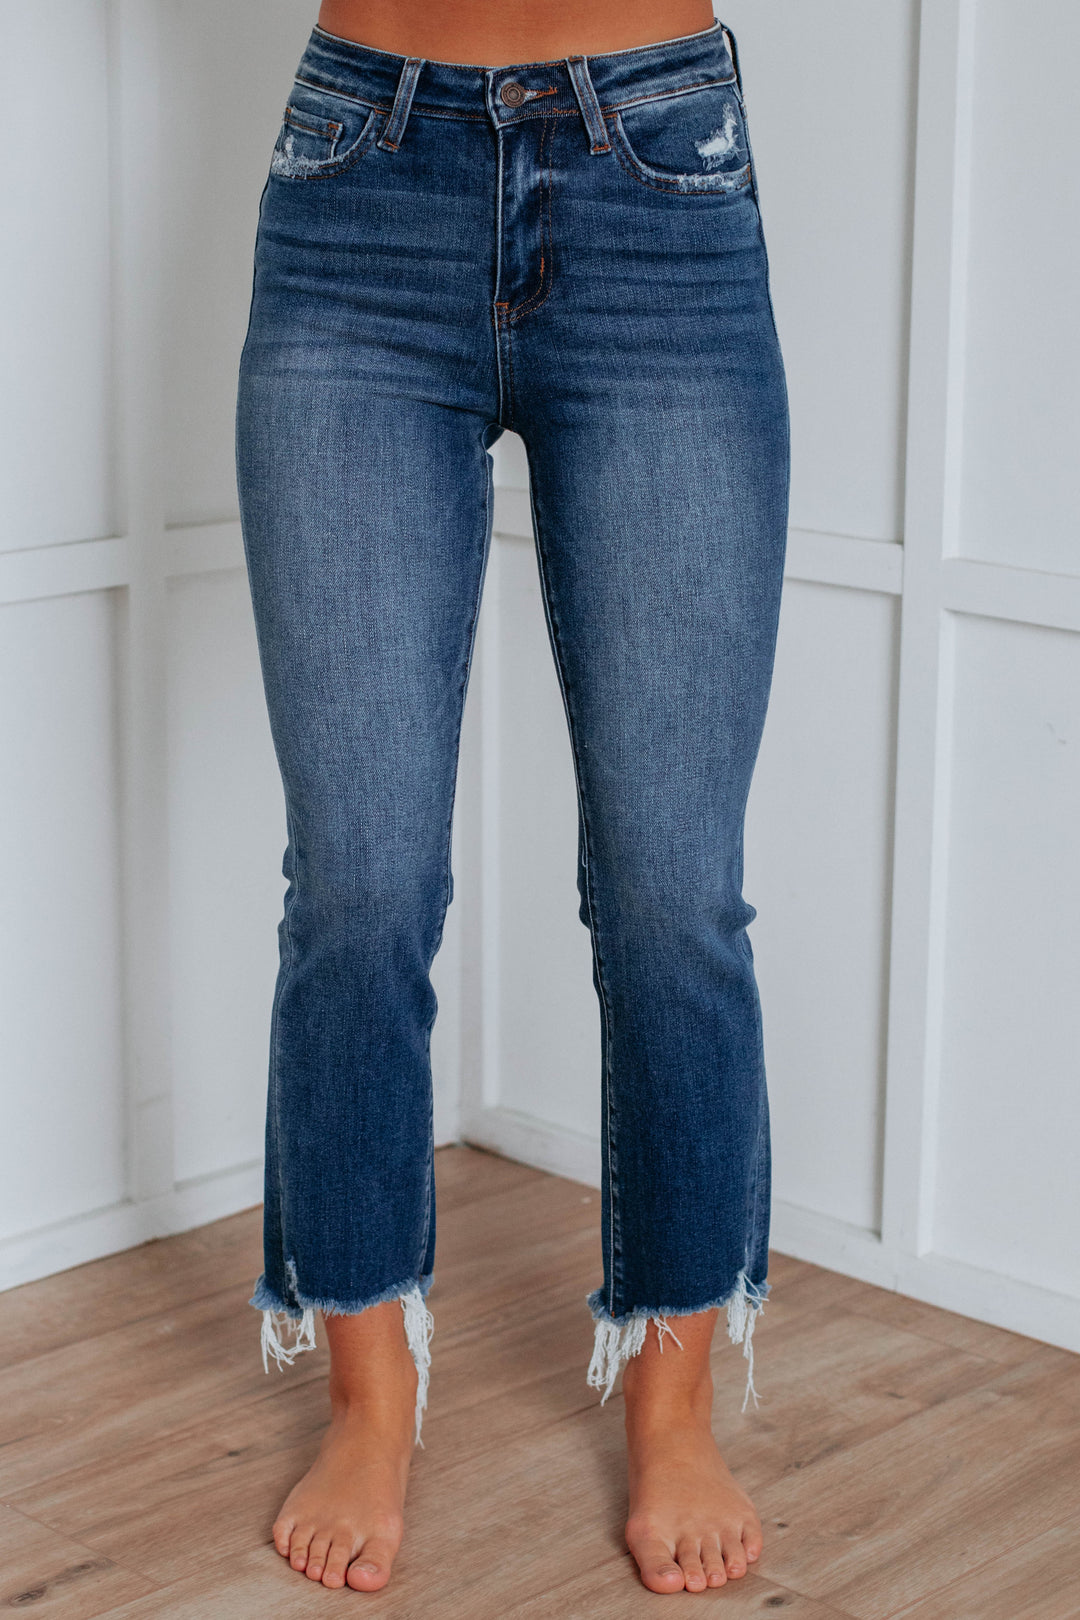 Bella Vervet Jeans